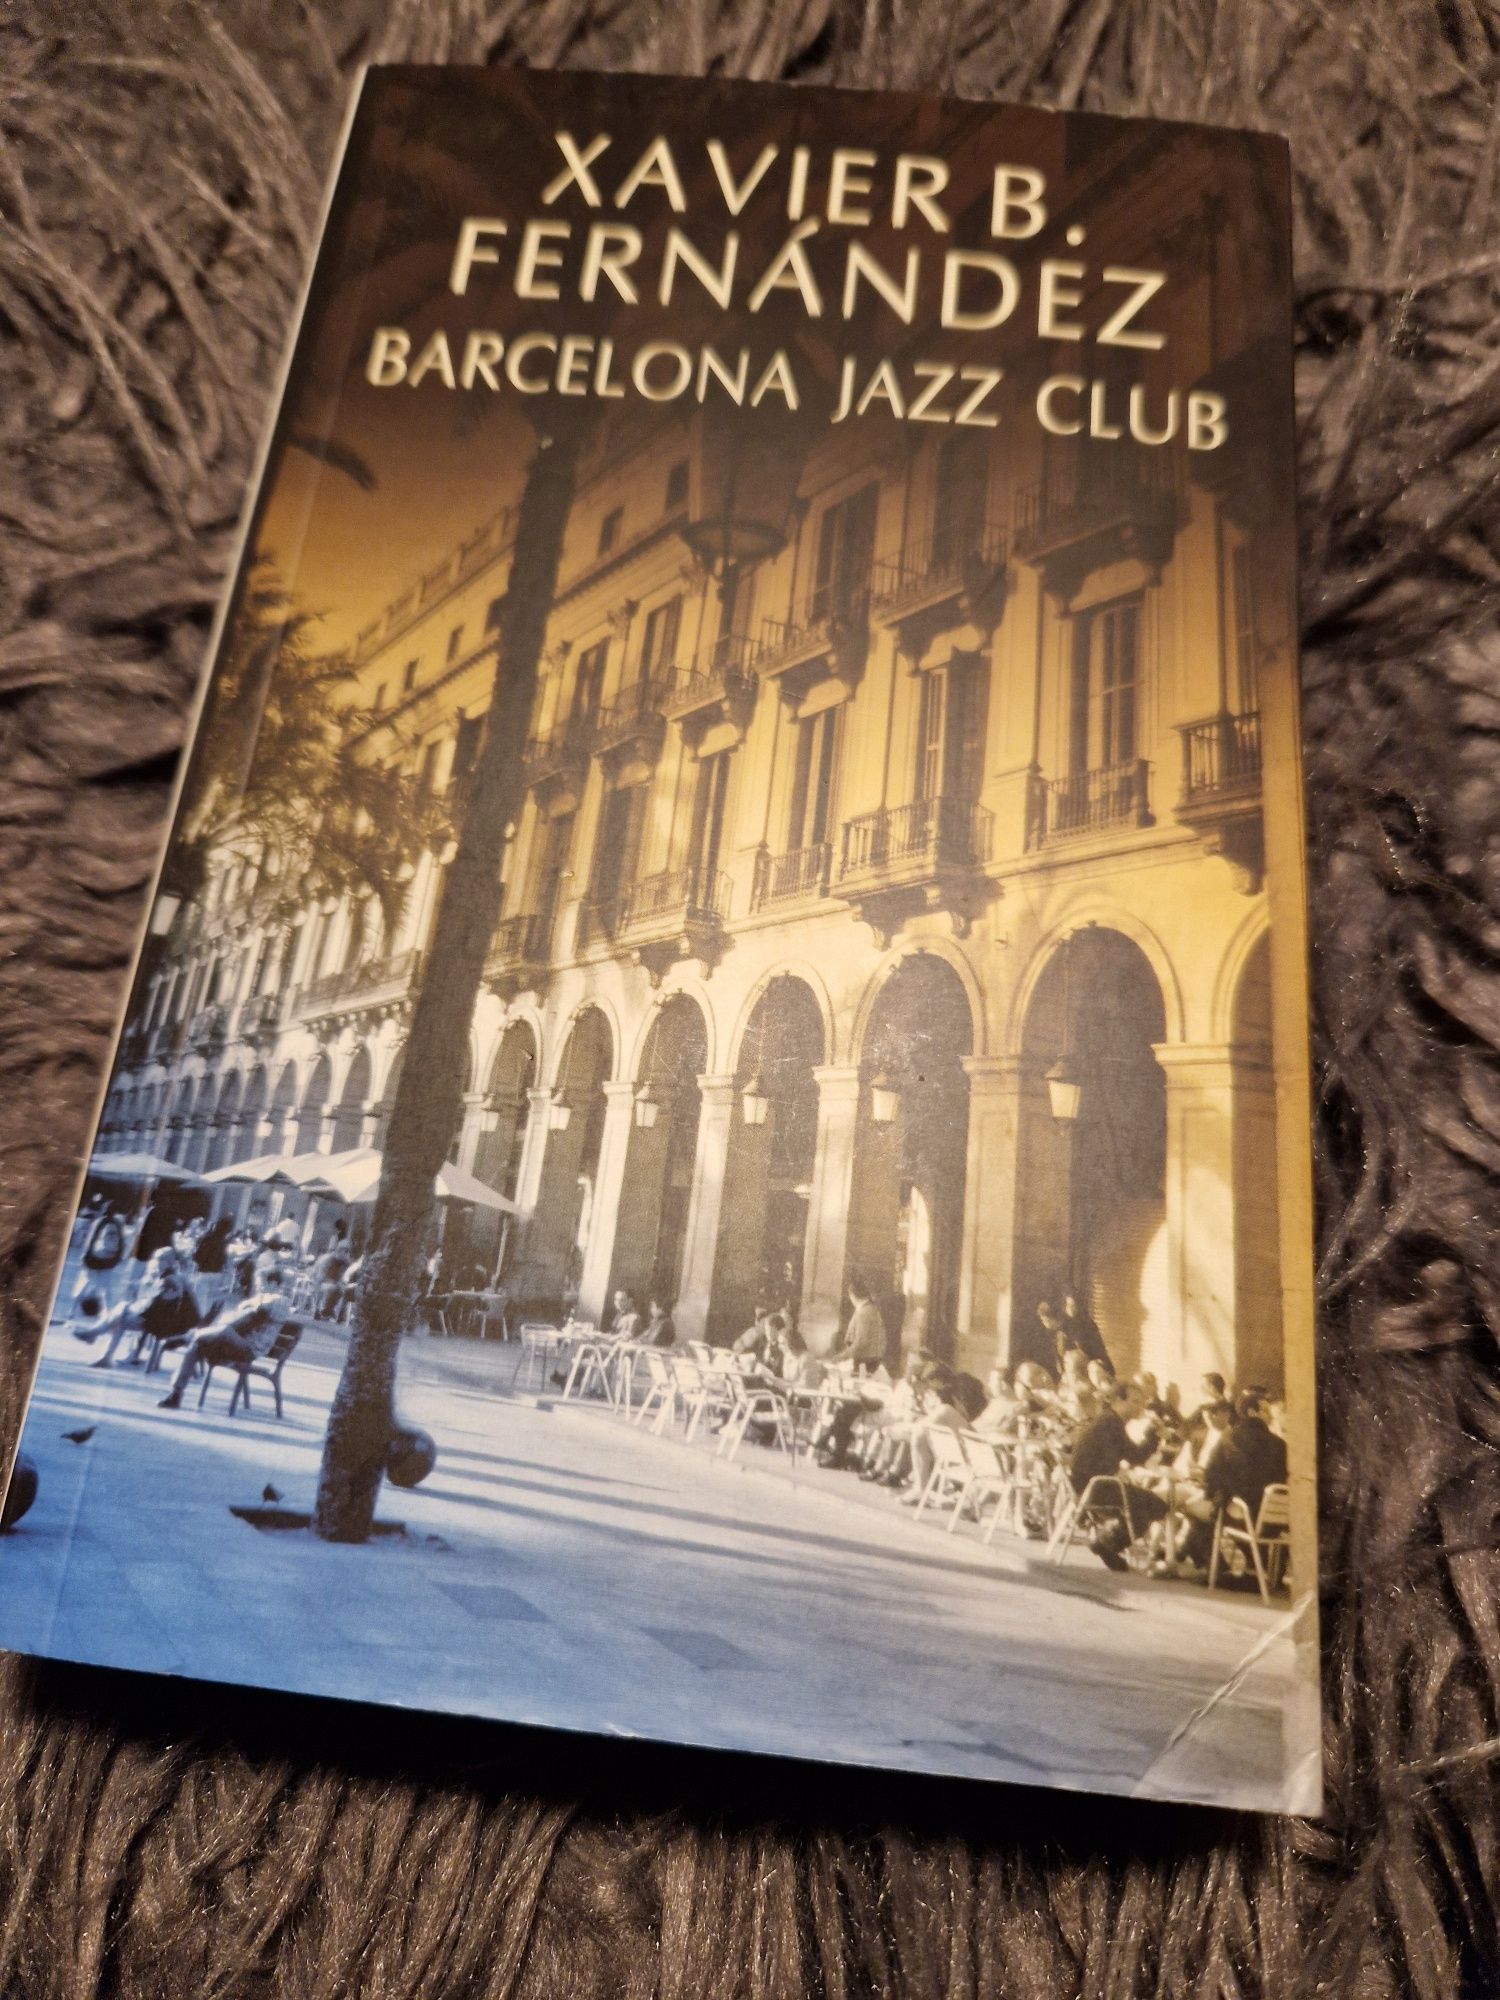 Barcelona jazz club  Xavier B. Fernandez